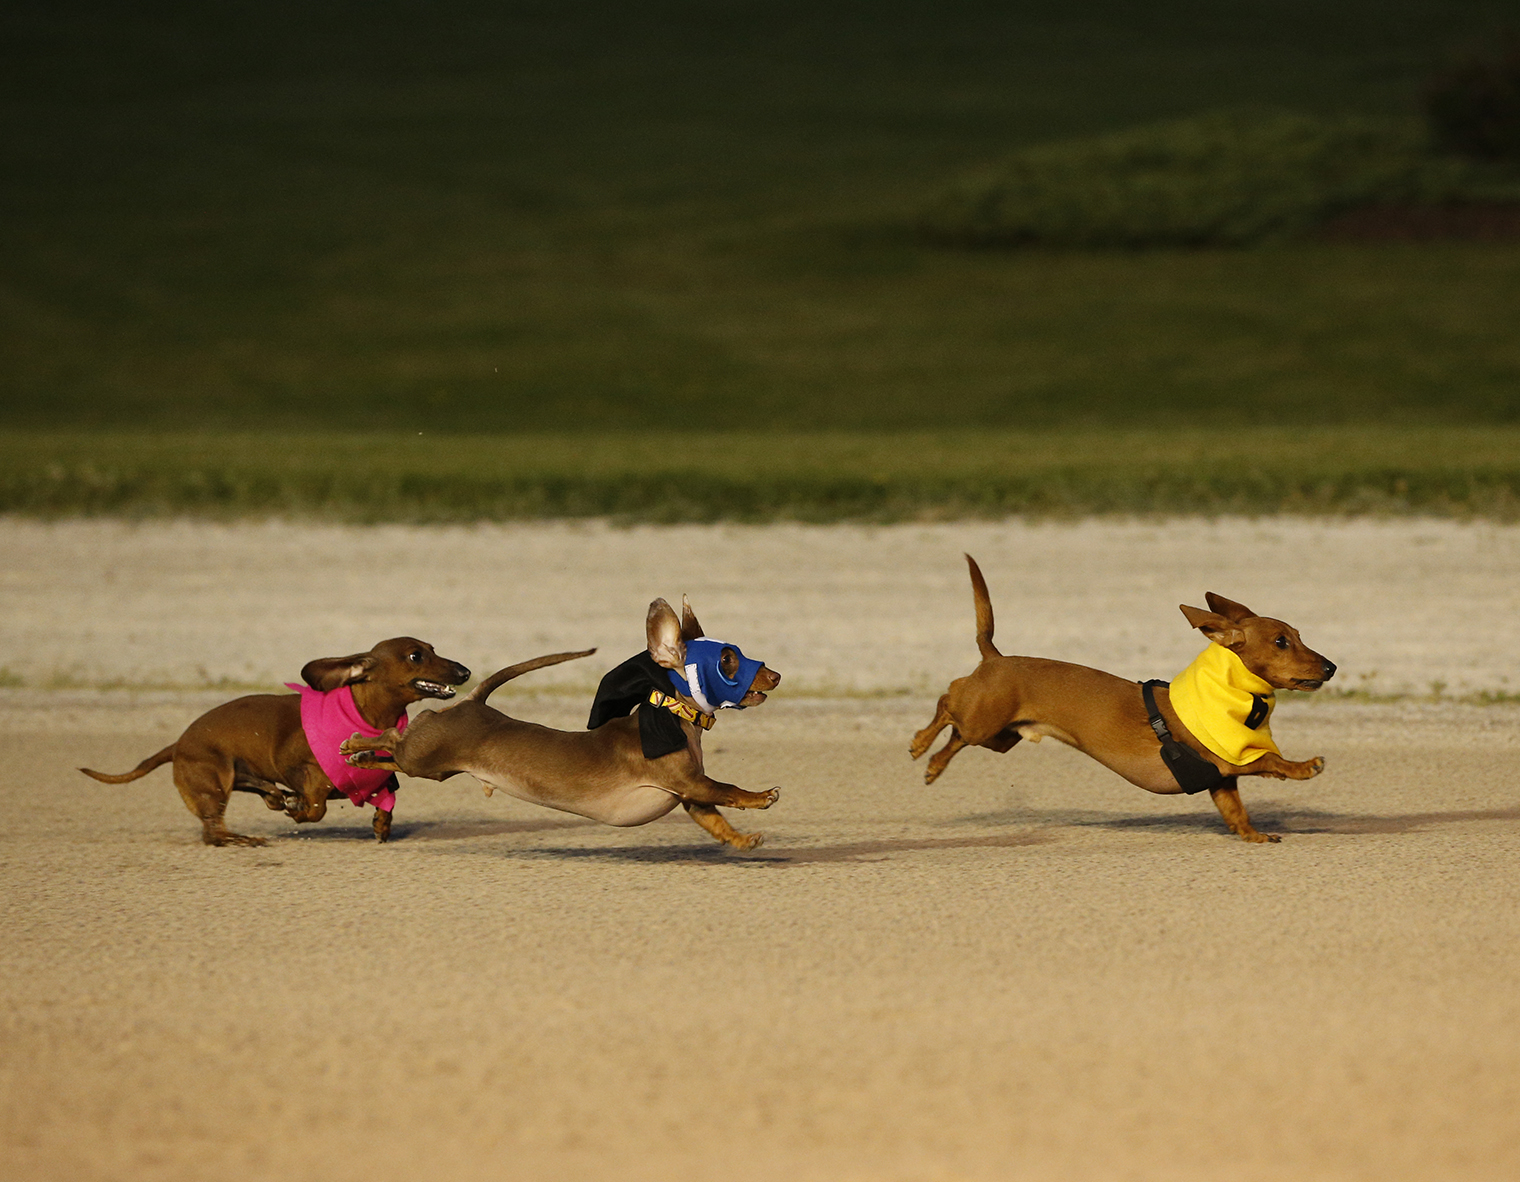 Wiener Dog Race - Grand River Raceway